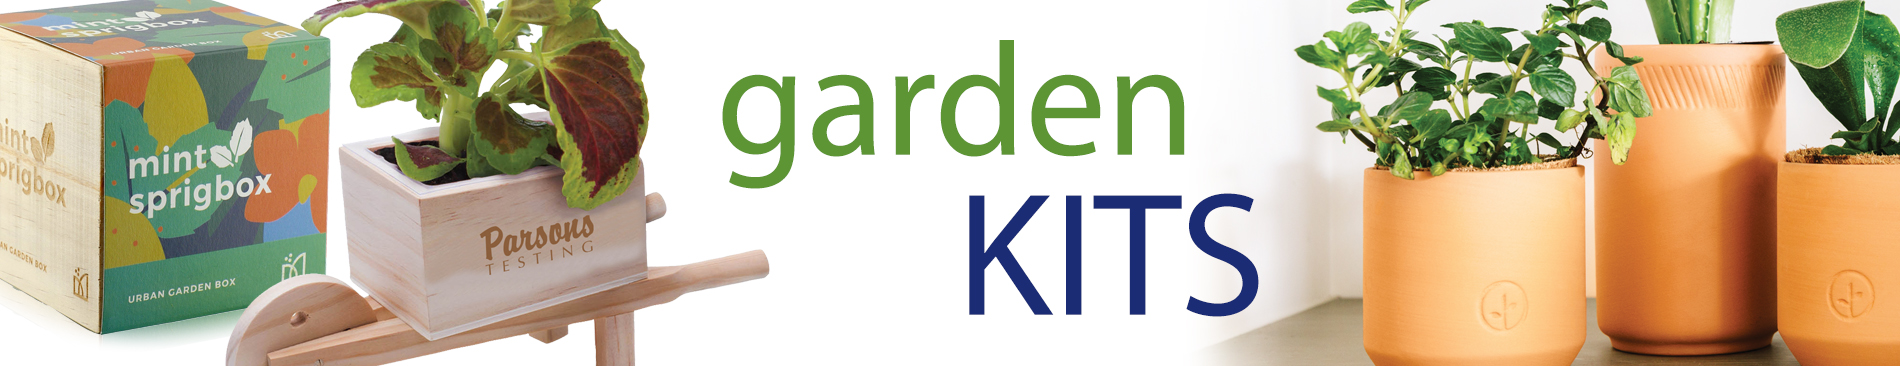 promotional garden kits